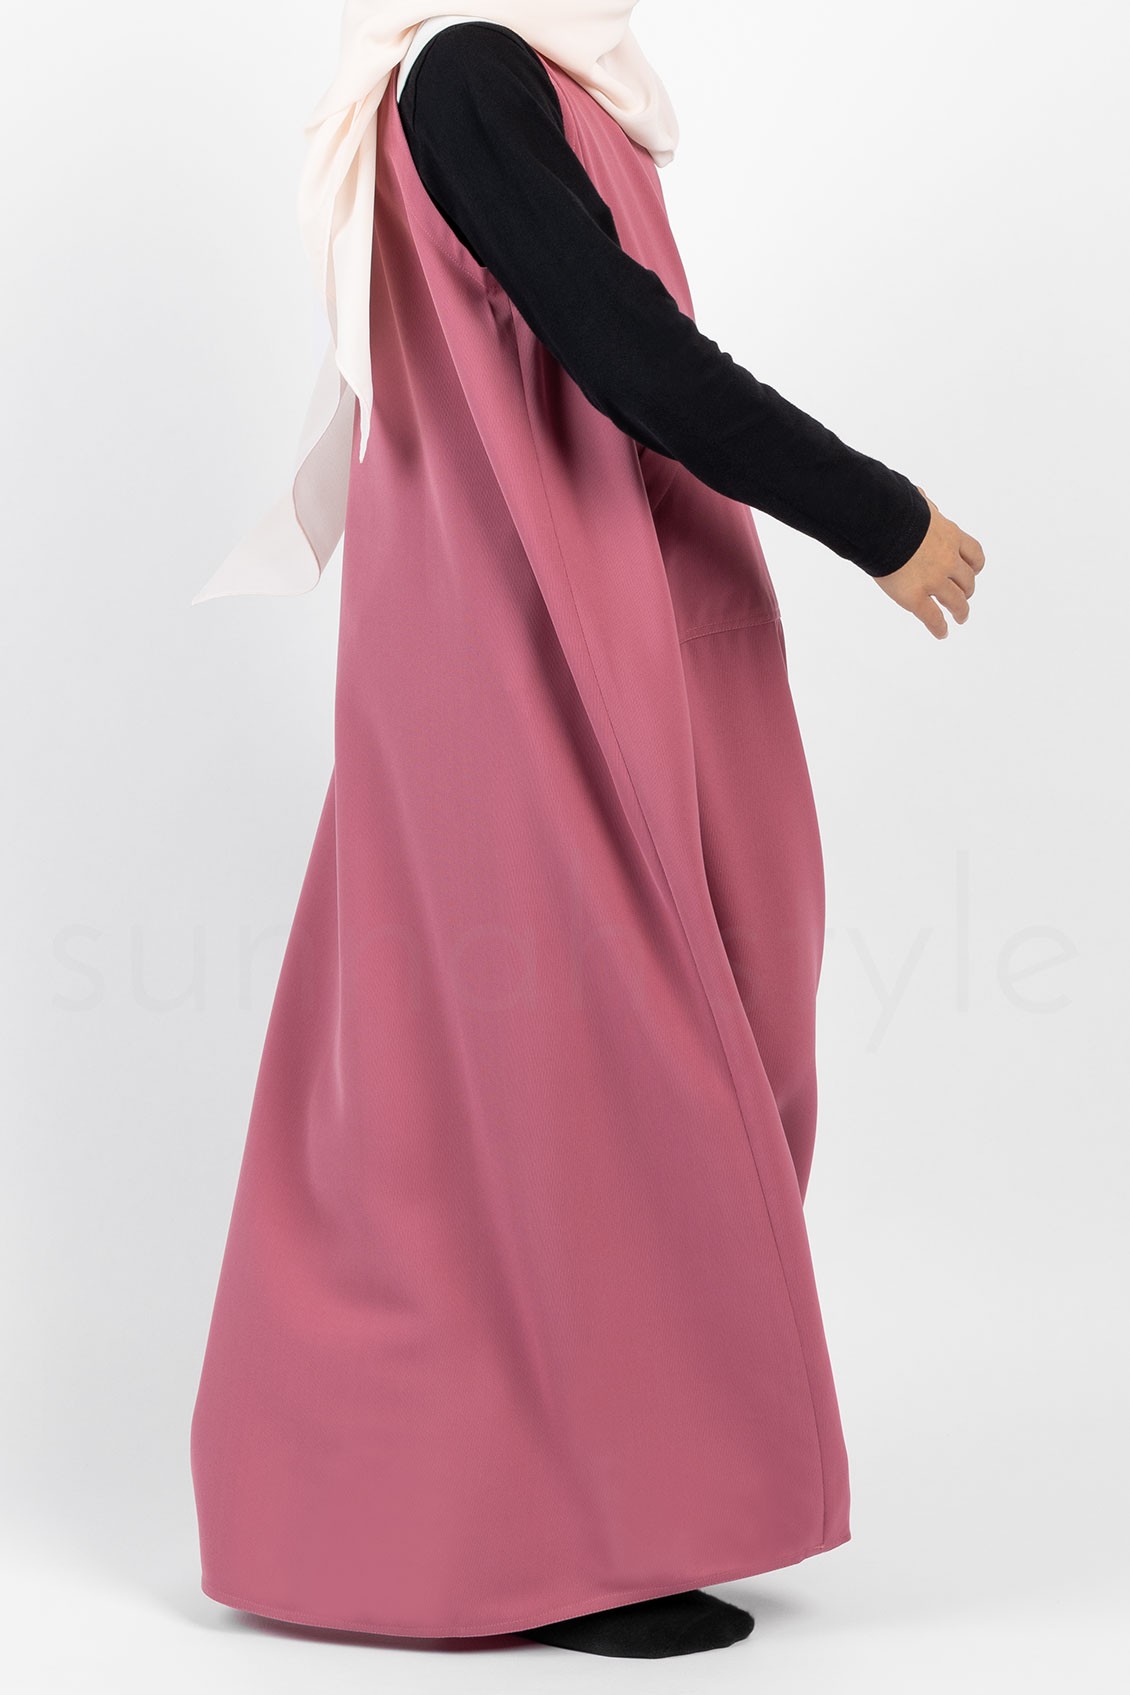 Sunnah Style Girls Essentials Sleeveless Abaya Desert Rose Pink